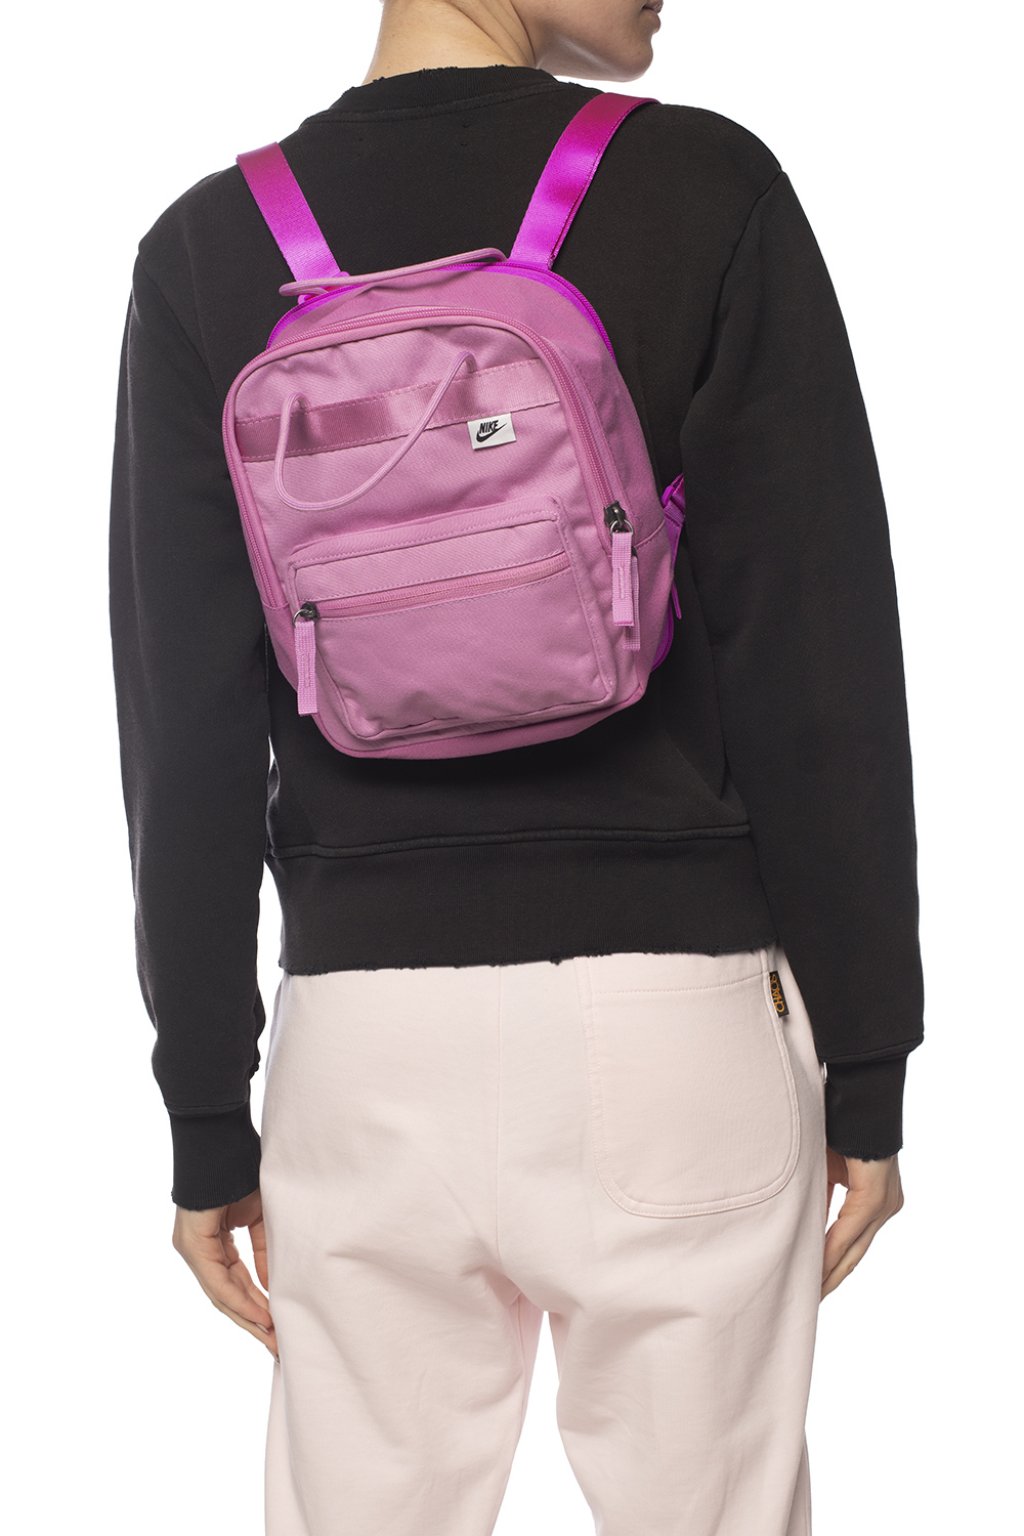 nike tanjun pink backpack